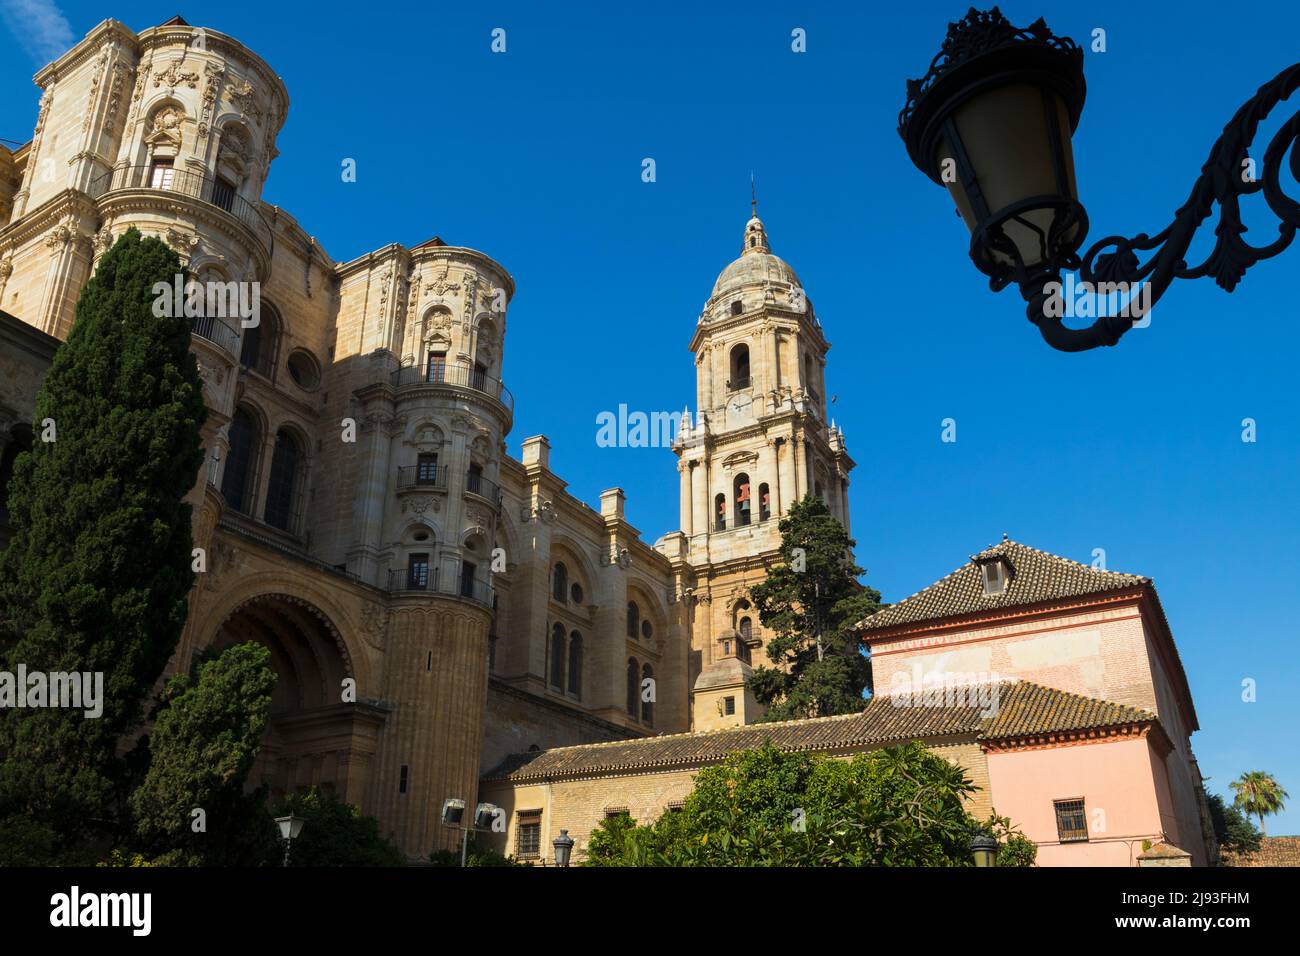 Malaga, Costa del Sol, Provinz Malaga, Andalusien, Südspanien. Die Kathedrale aus der Renaissance. Voller spanischer Name ist La Santa Iglesia Catedral Basilica Stockfoto